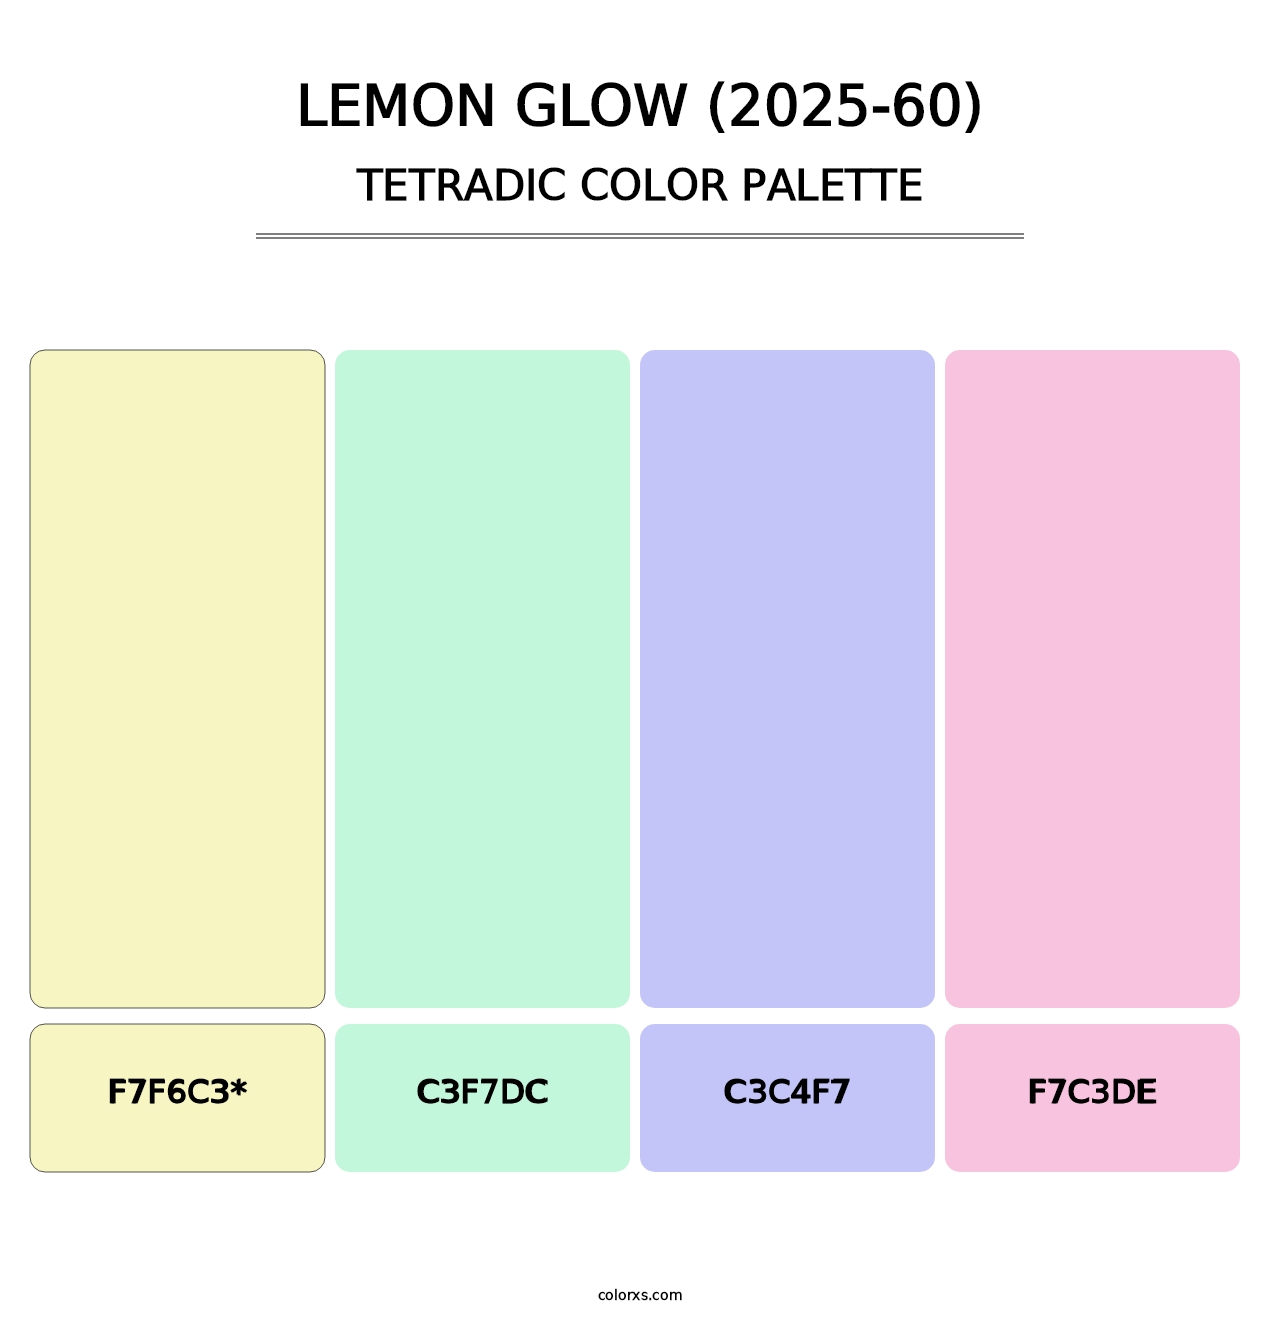 Lemon Glow (2025-60) - Tetradic Color Palette